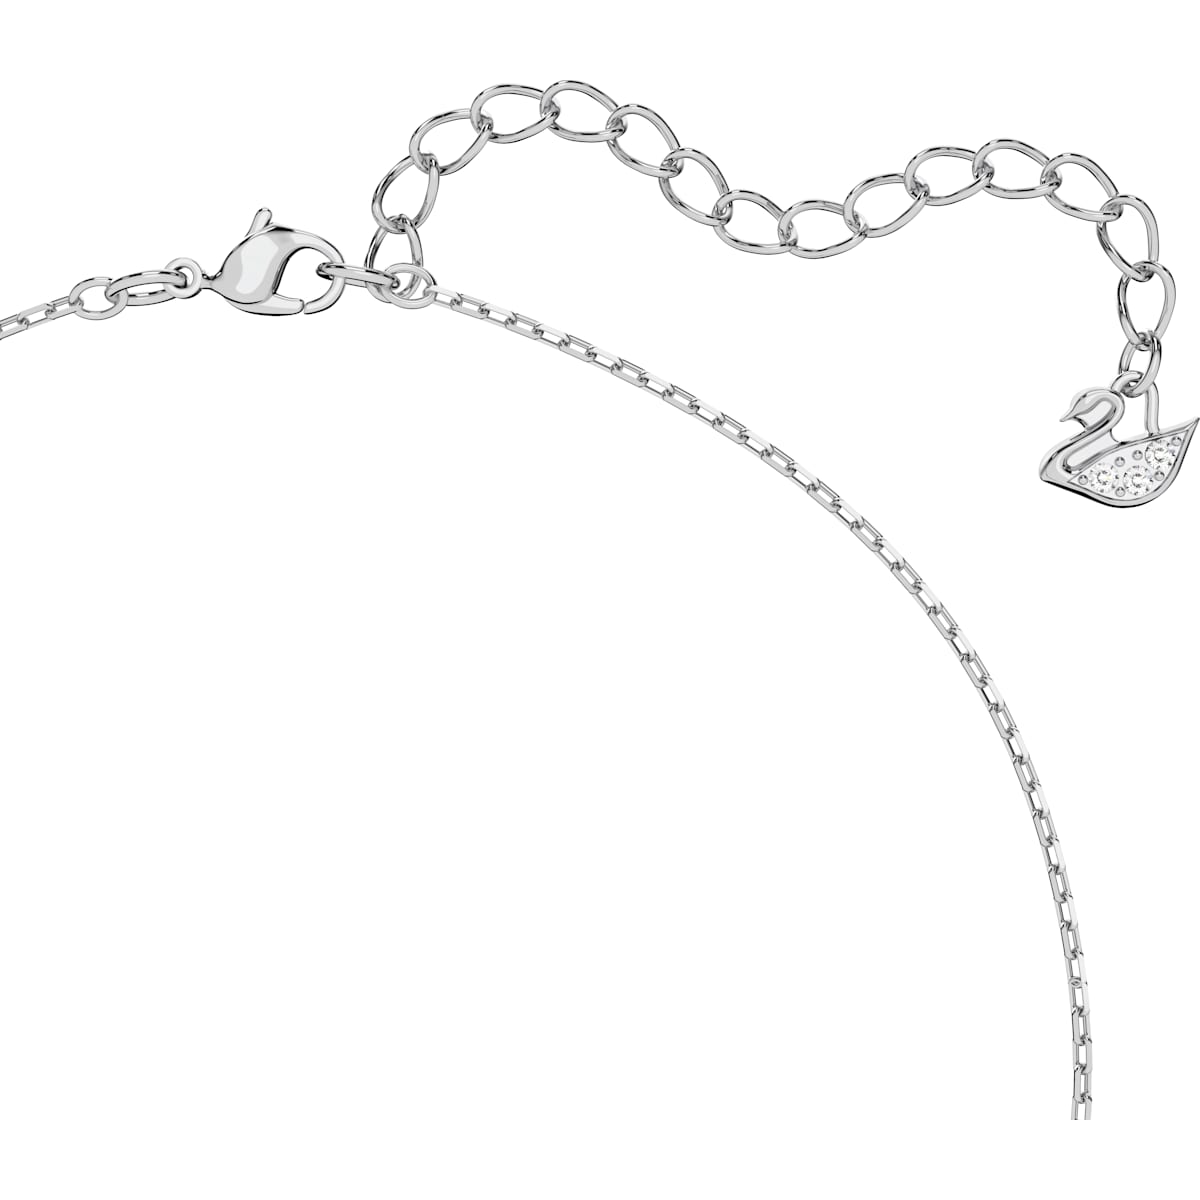 Swarovski Crystal Collar Necklace, 14-7/8